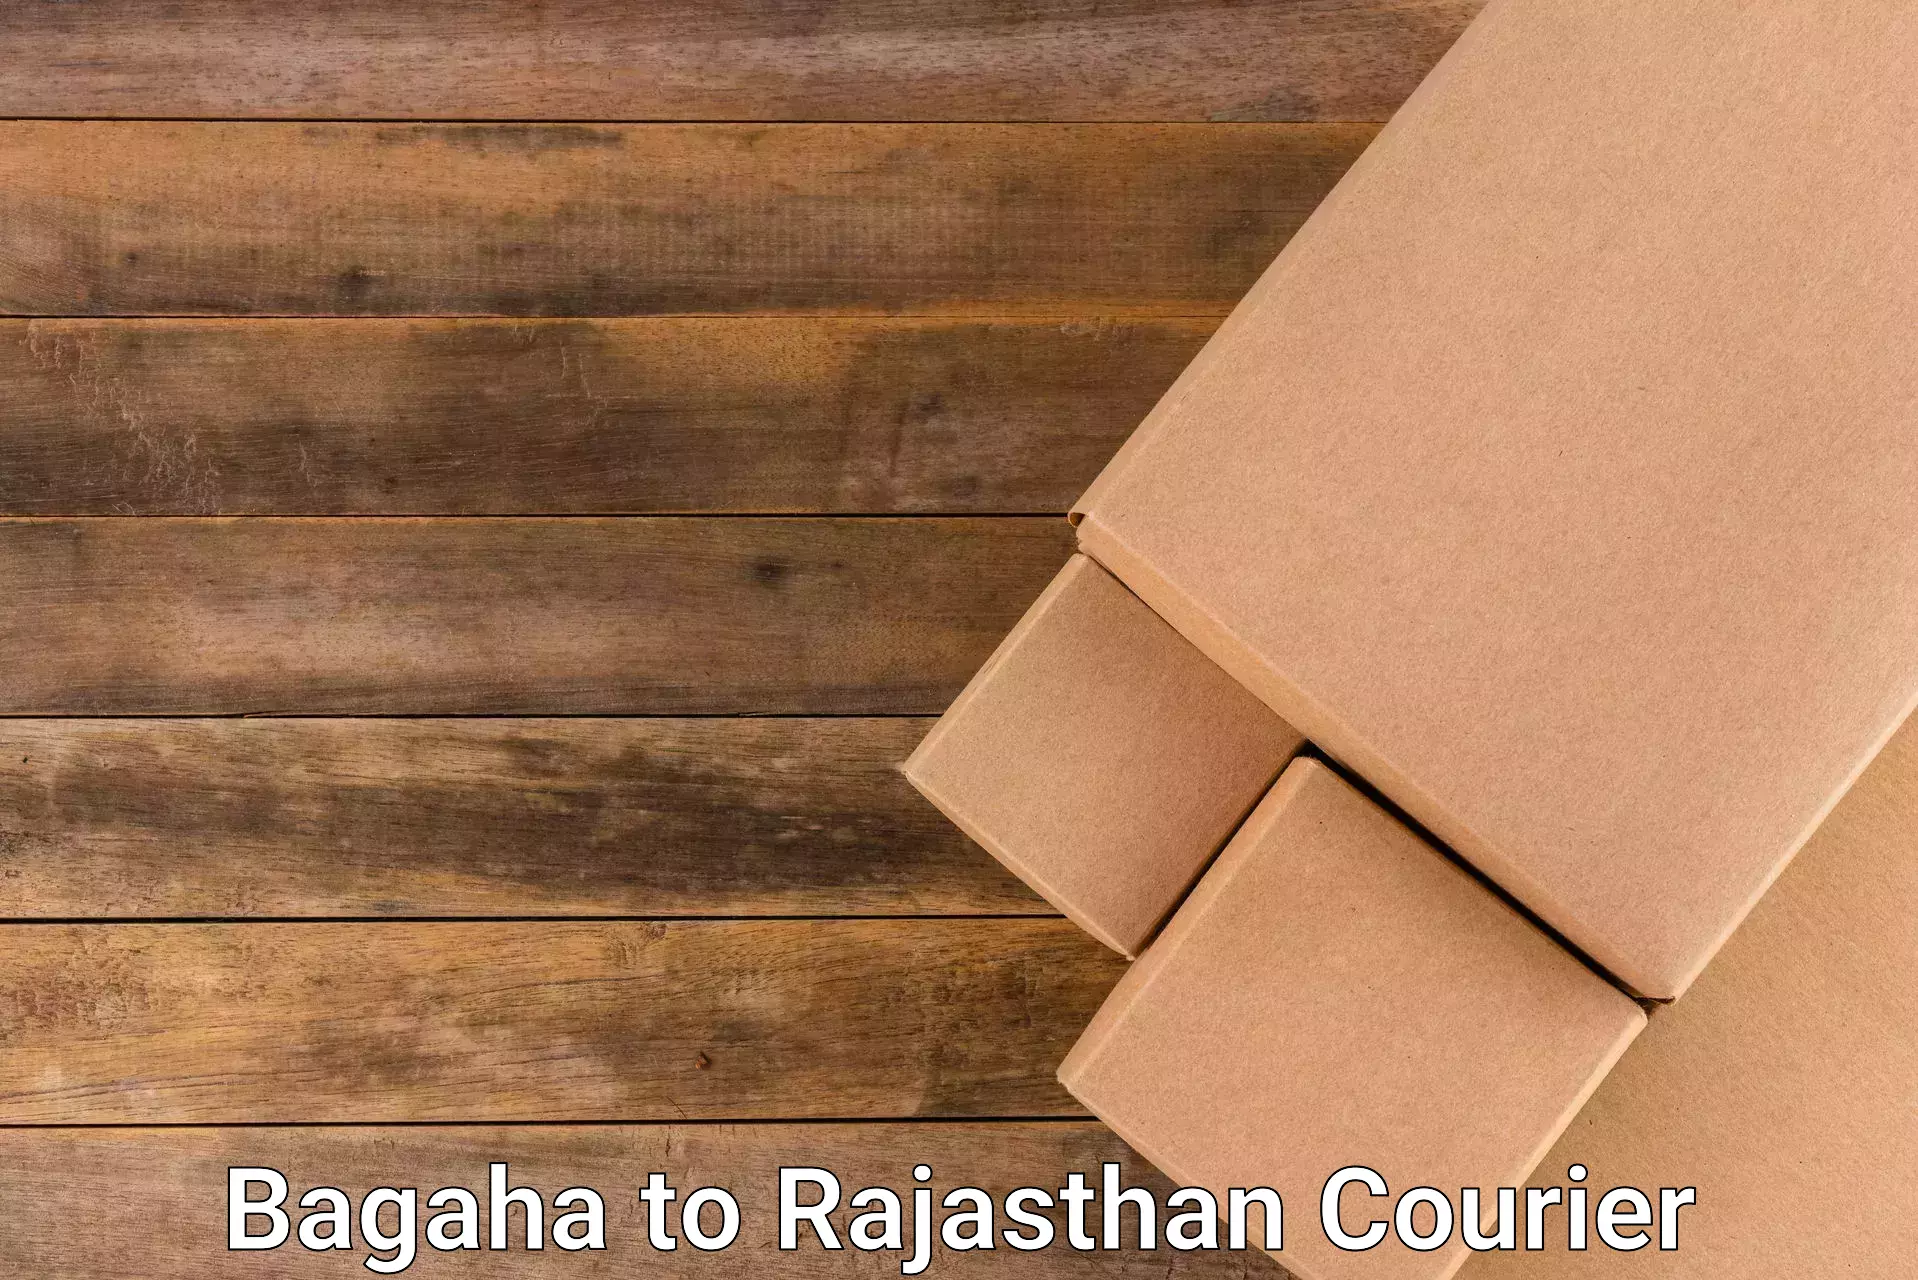 Courier service innovation Bagaha to IIT Jodhpur